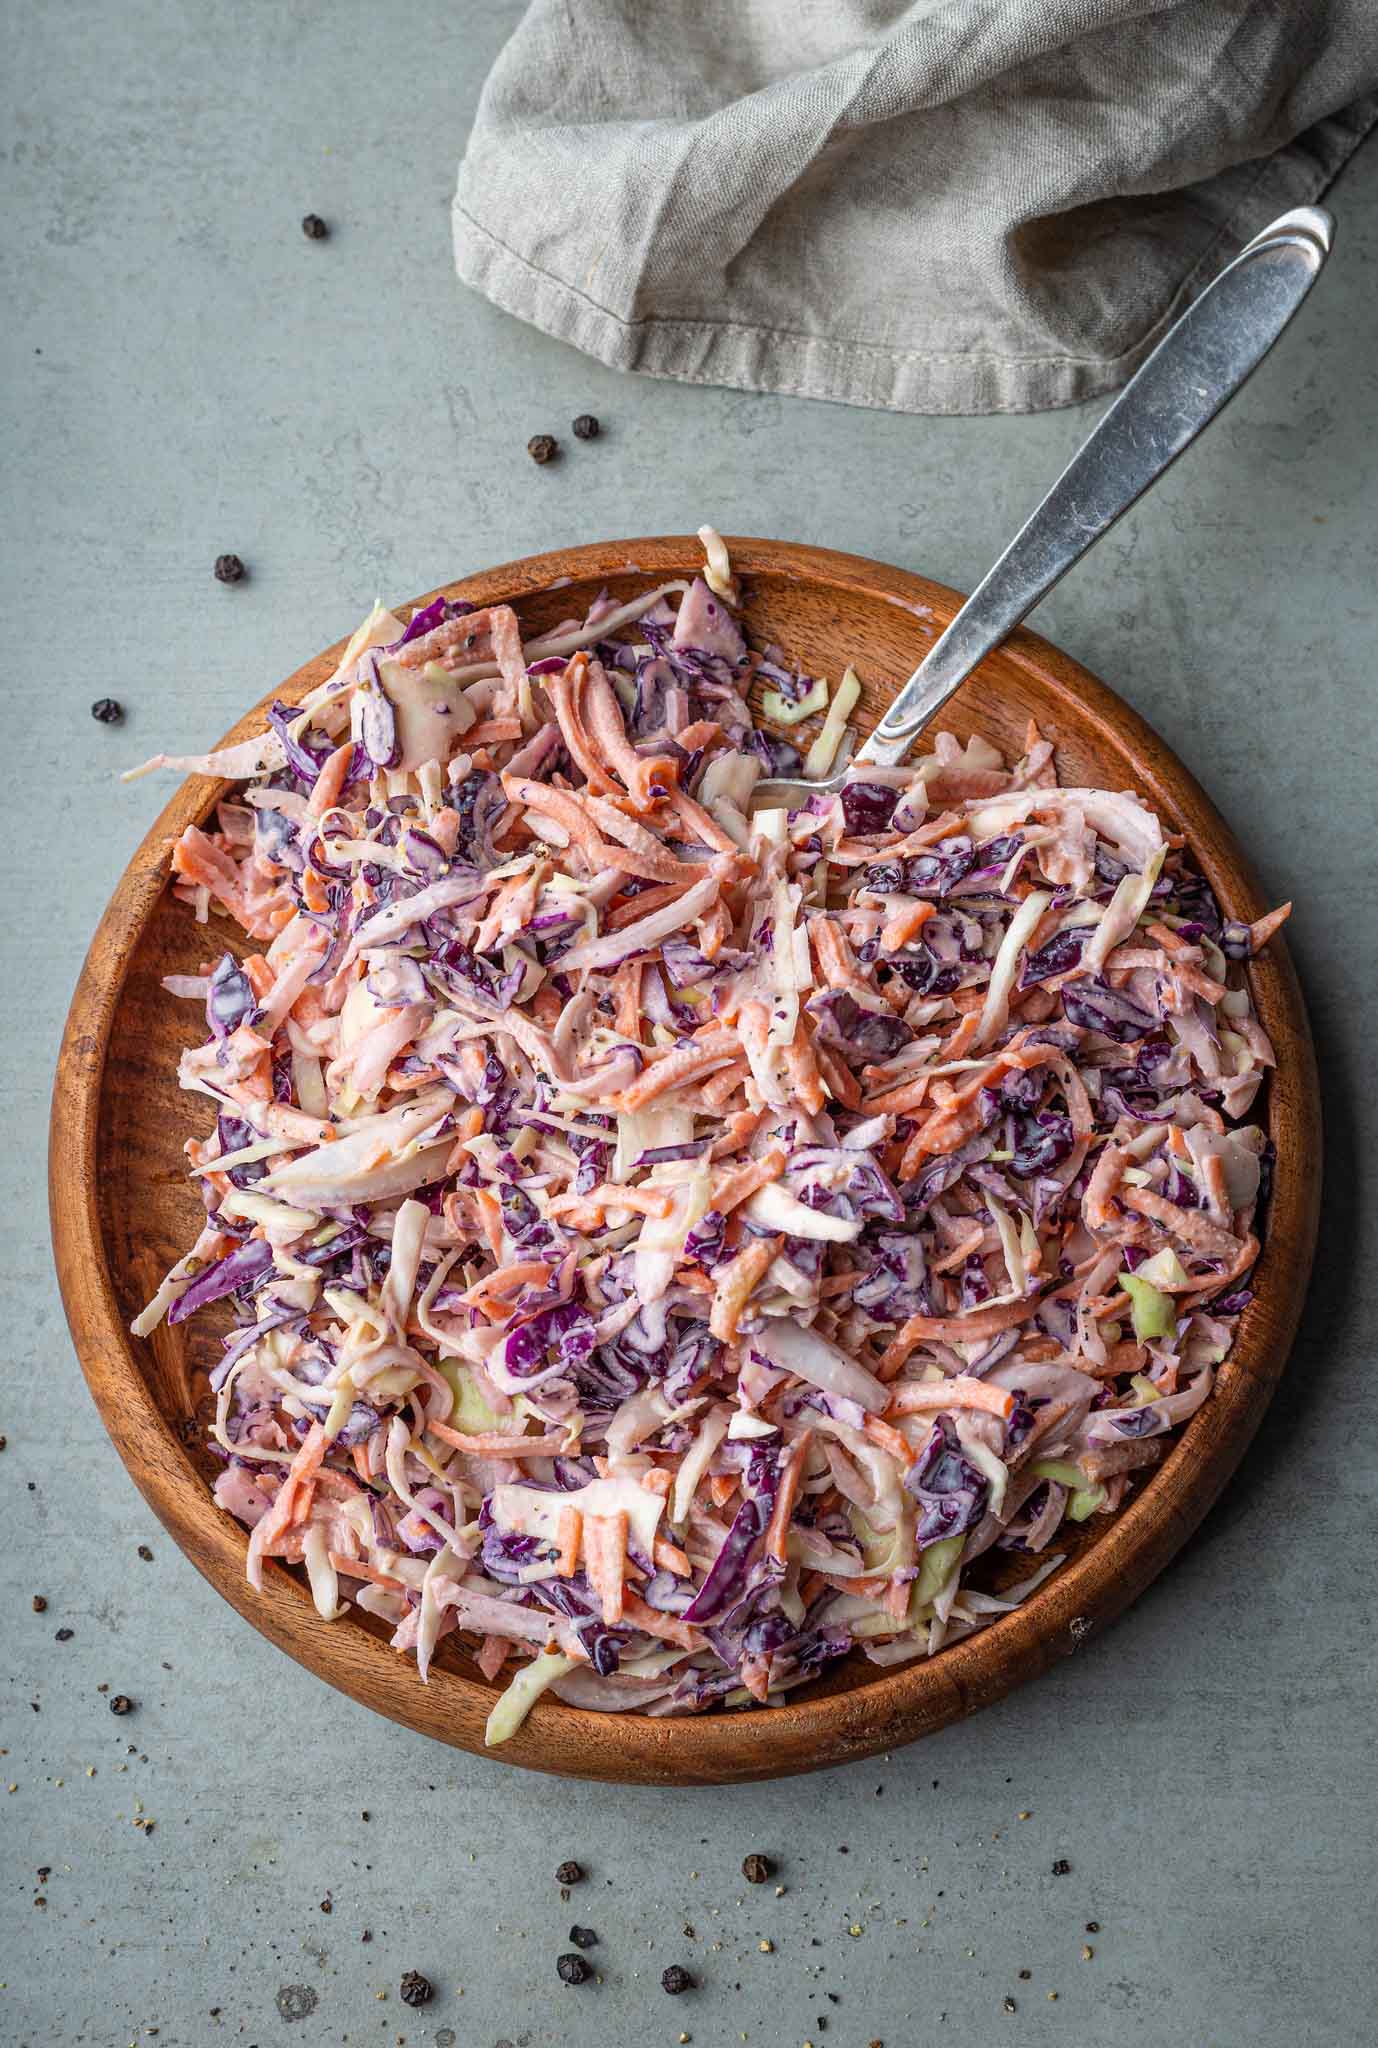 Coleslaw – Cremiger Krautsalat mit veganem Cashewdressing